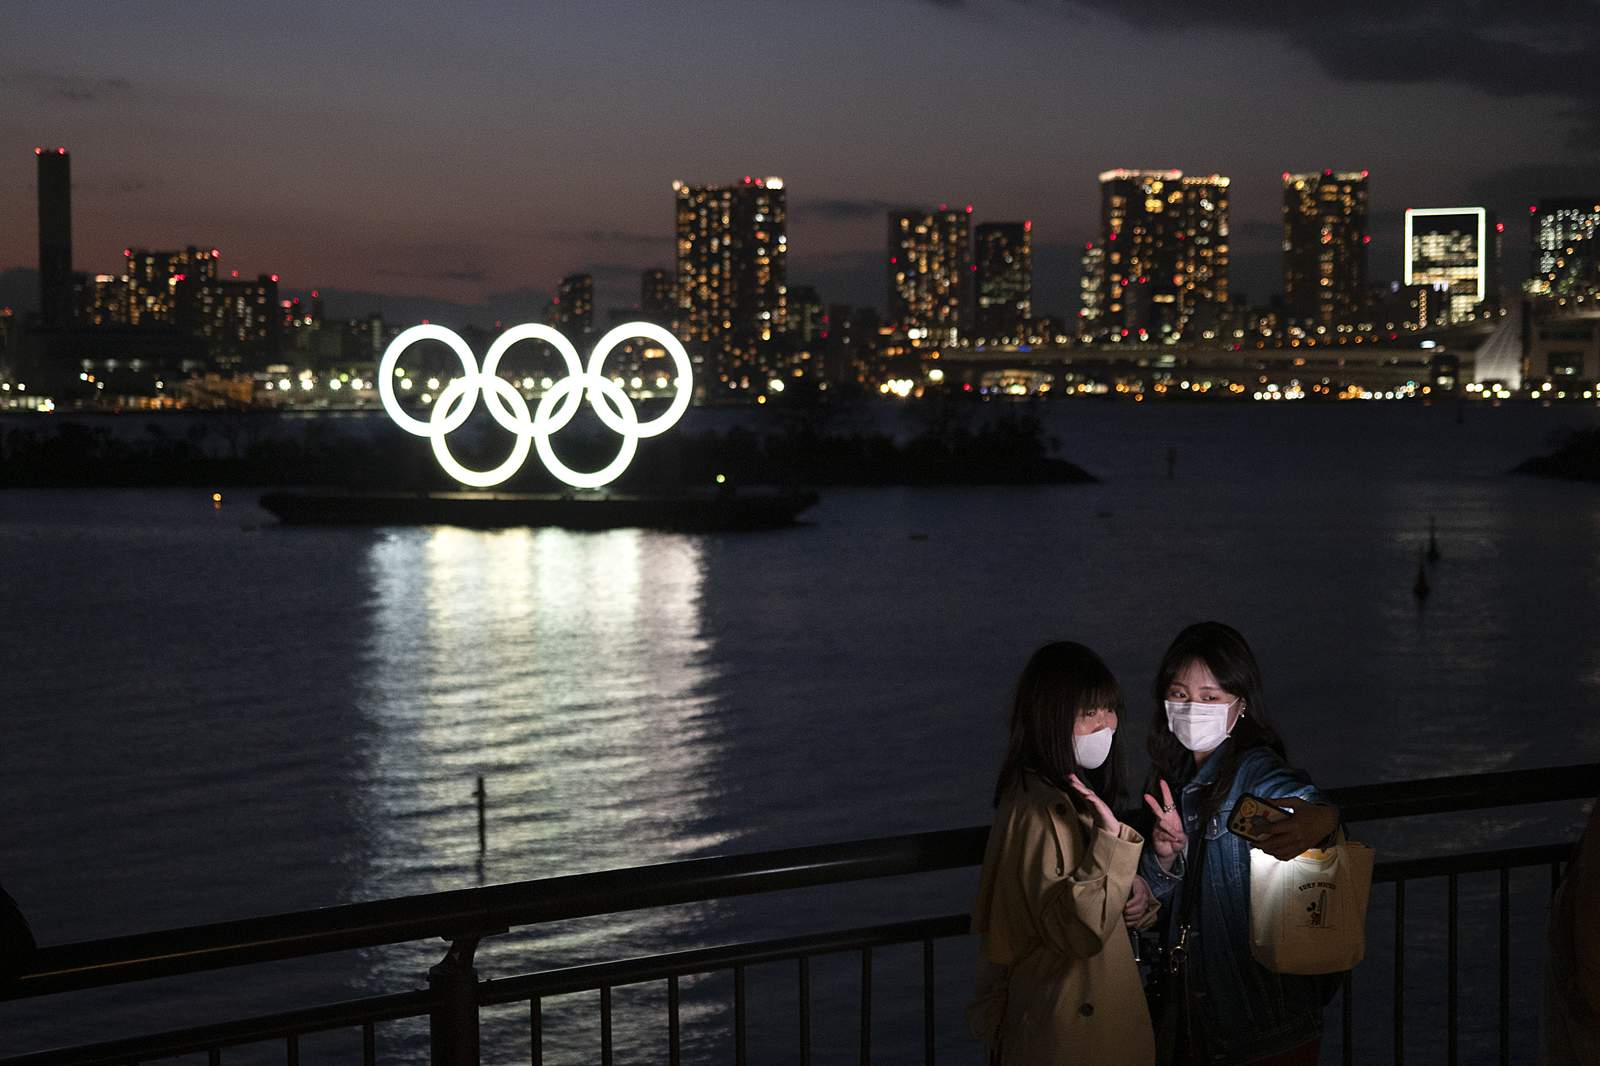 Torch relay among final hurdles for postponed Tokyo Olympics